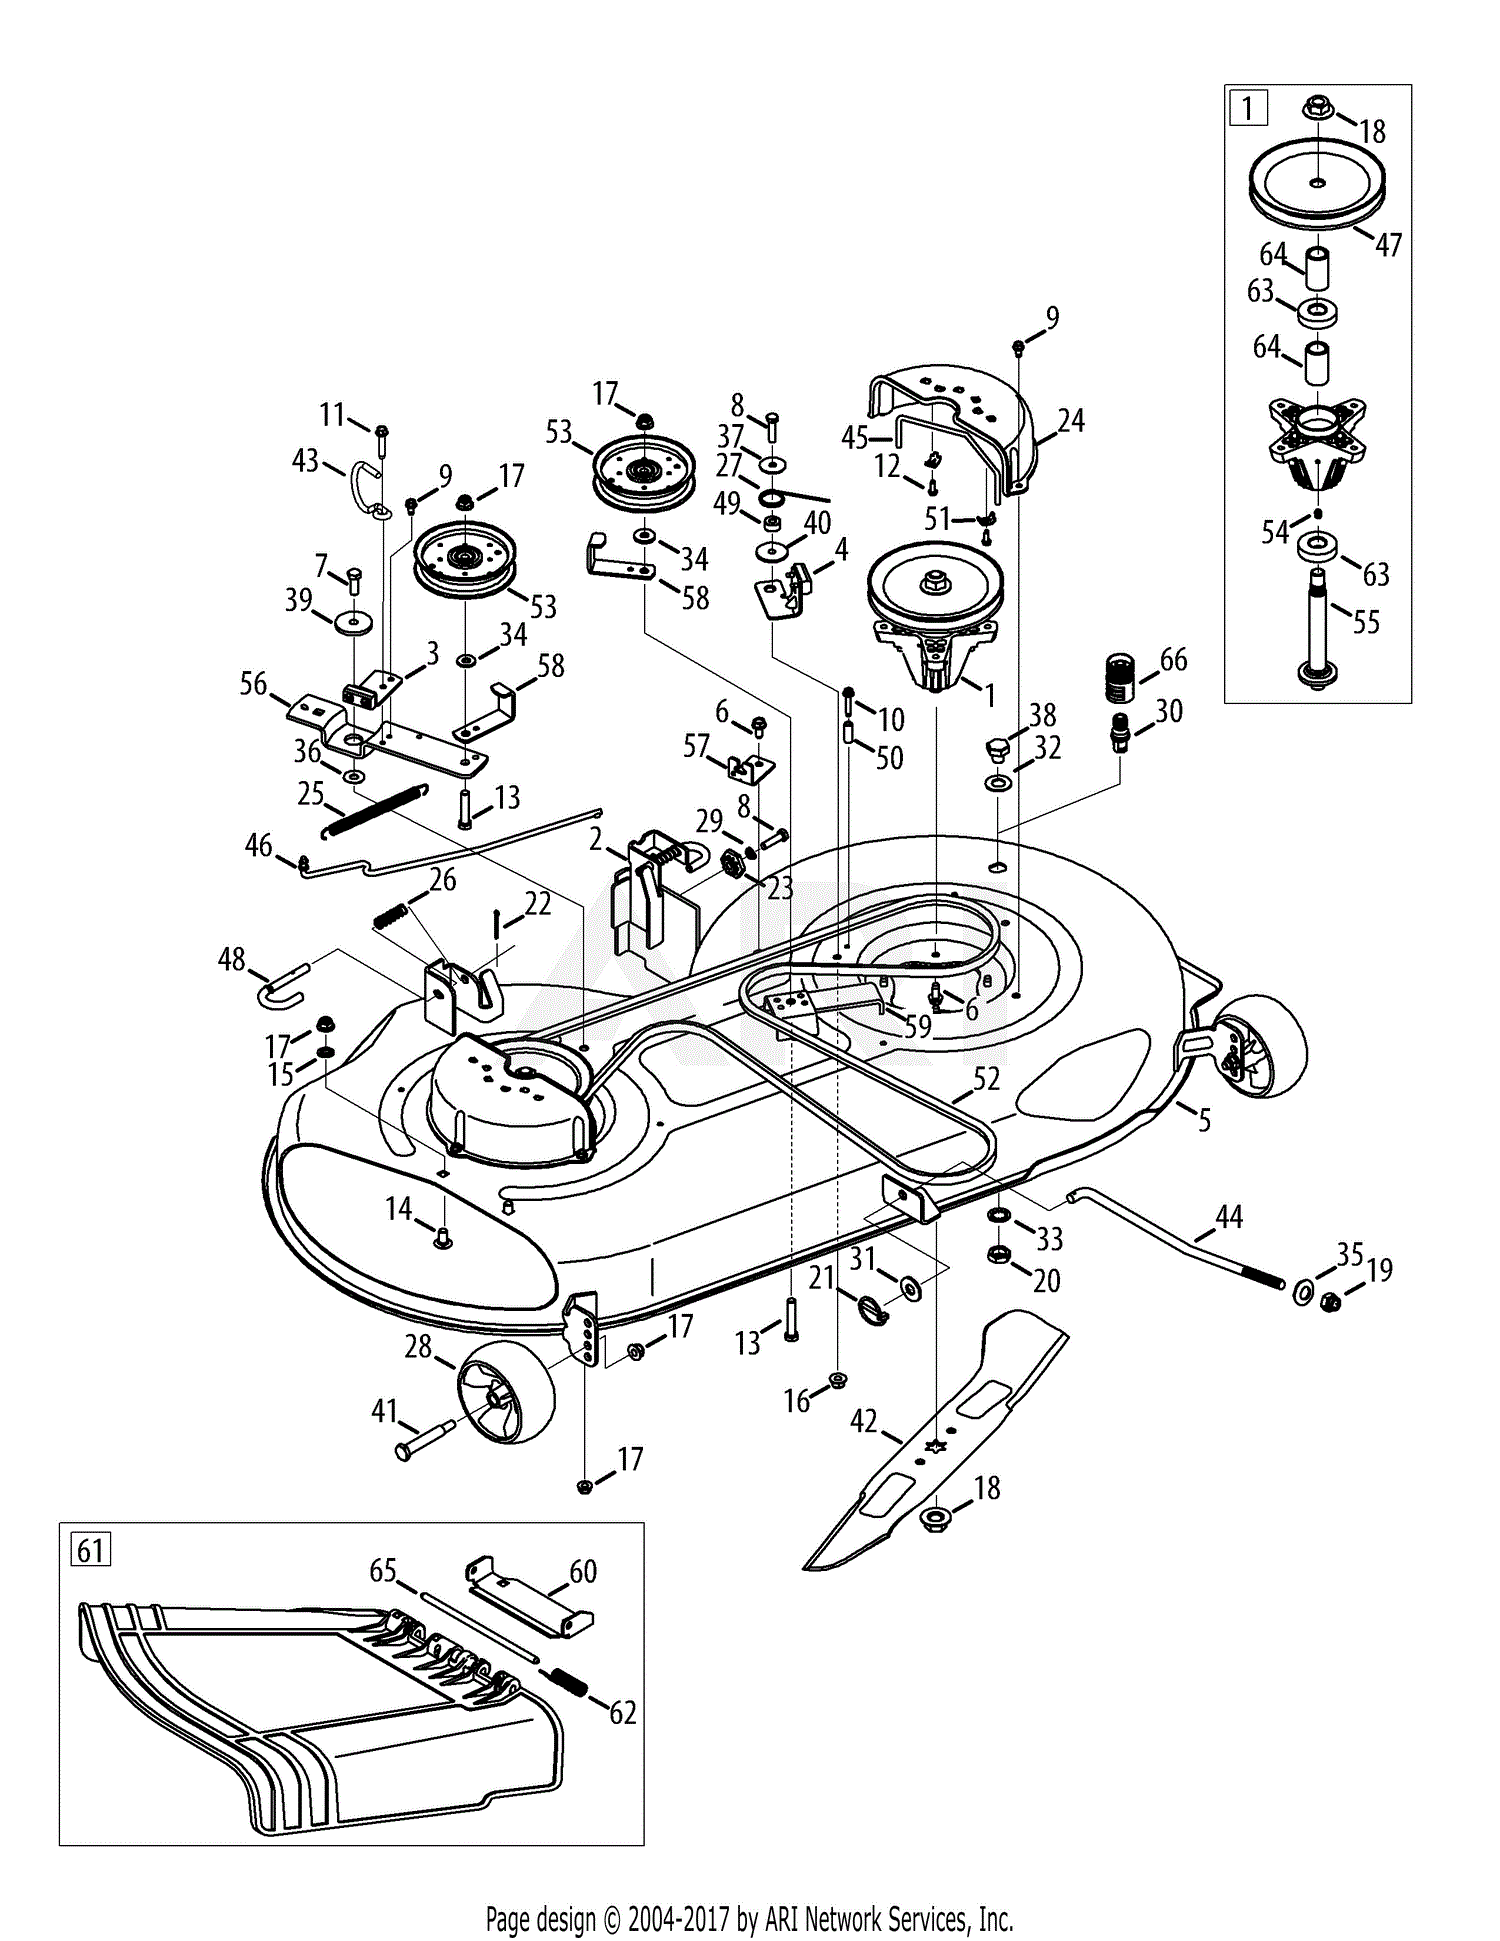 Yardman 42 riding mower belt diagram